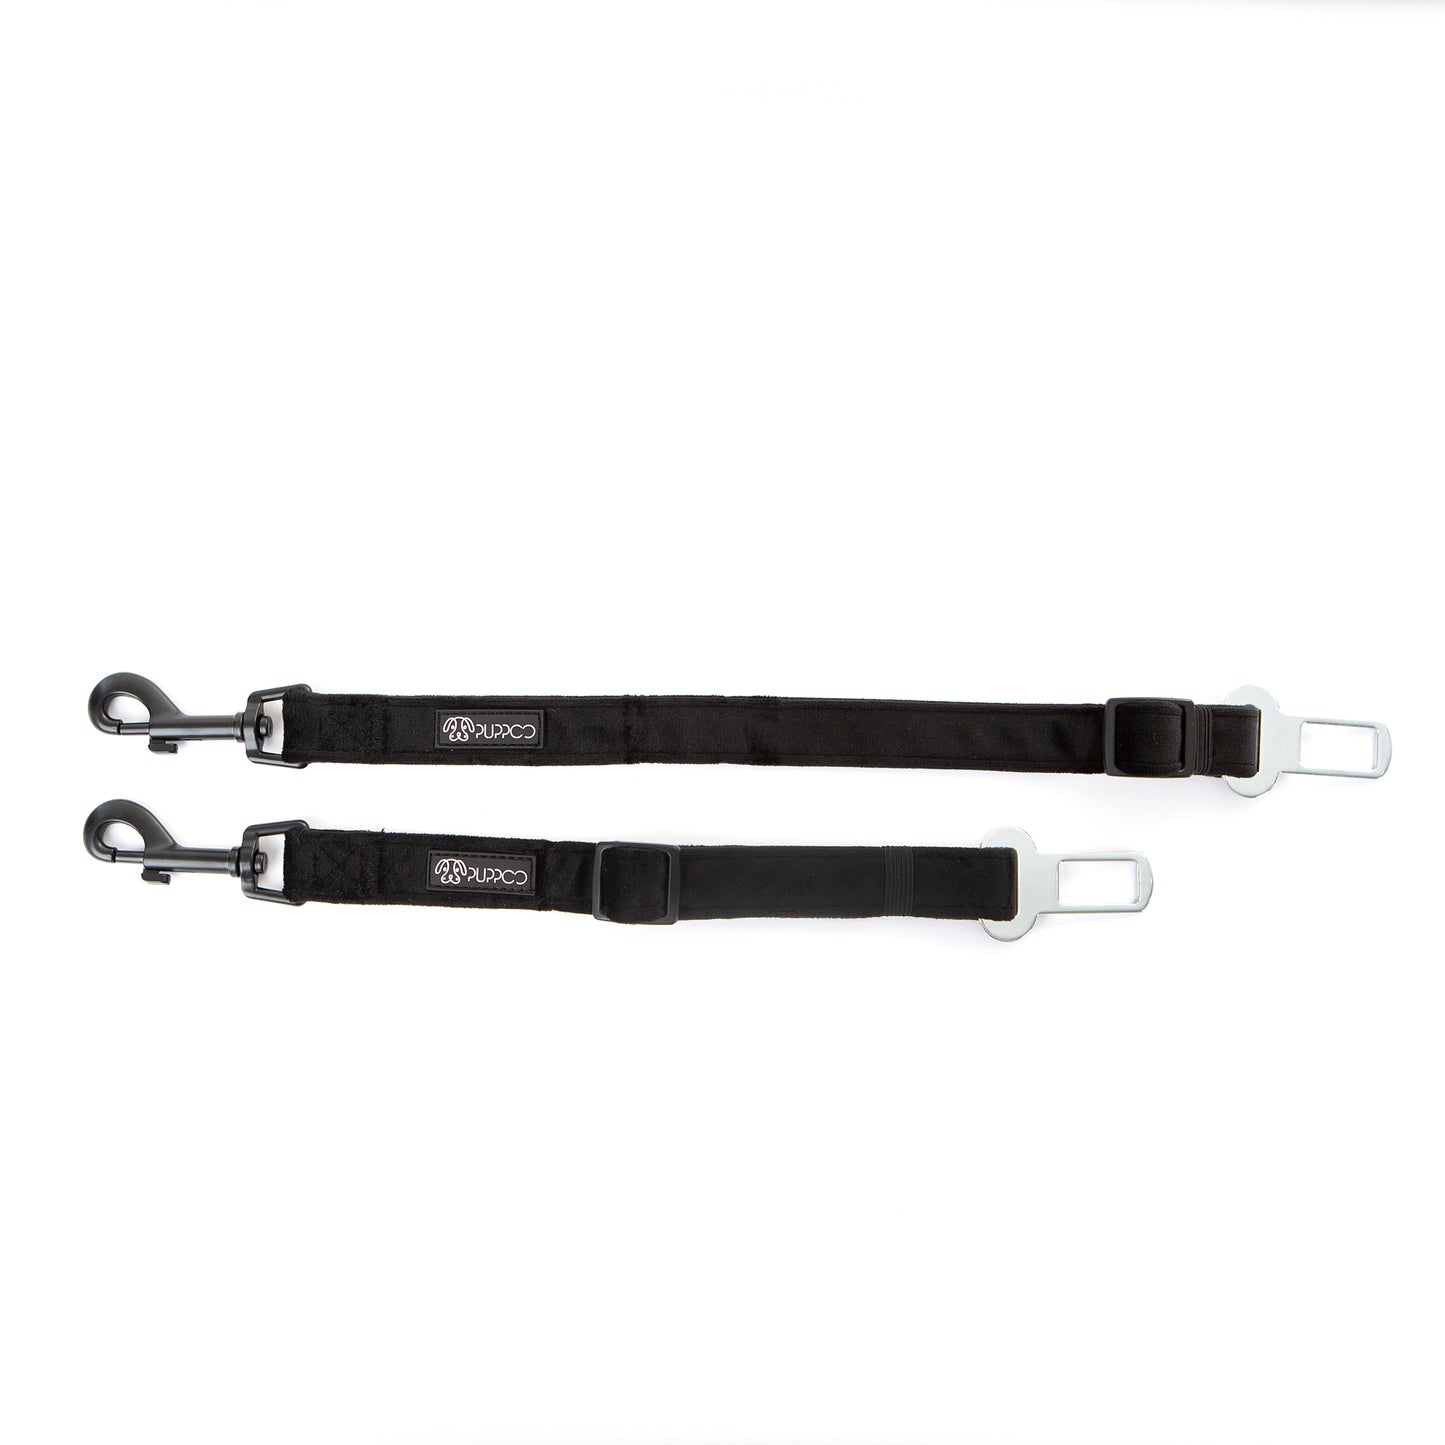 Velvet Deluxe Adjustable Seat Belt Attachment - Black